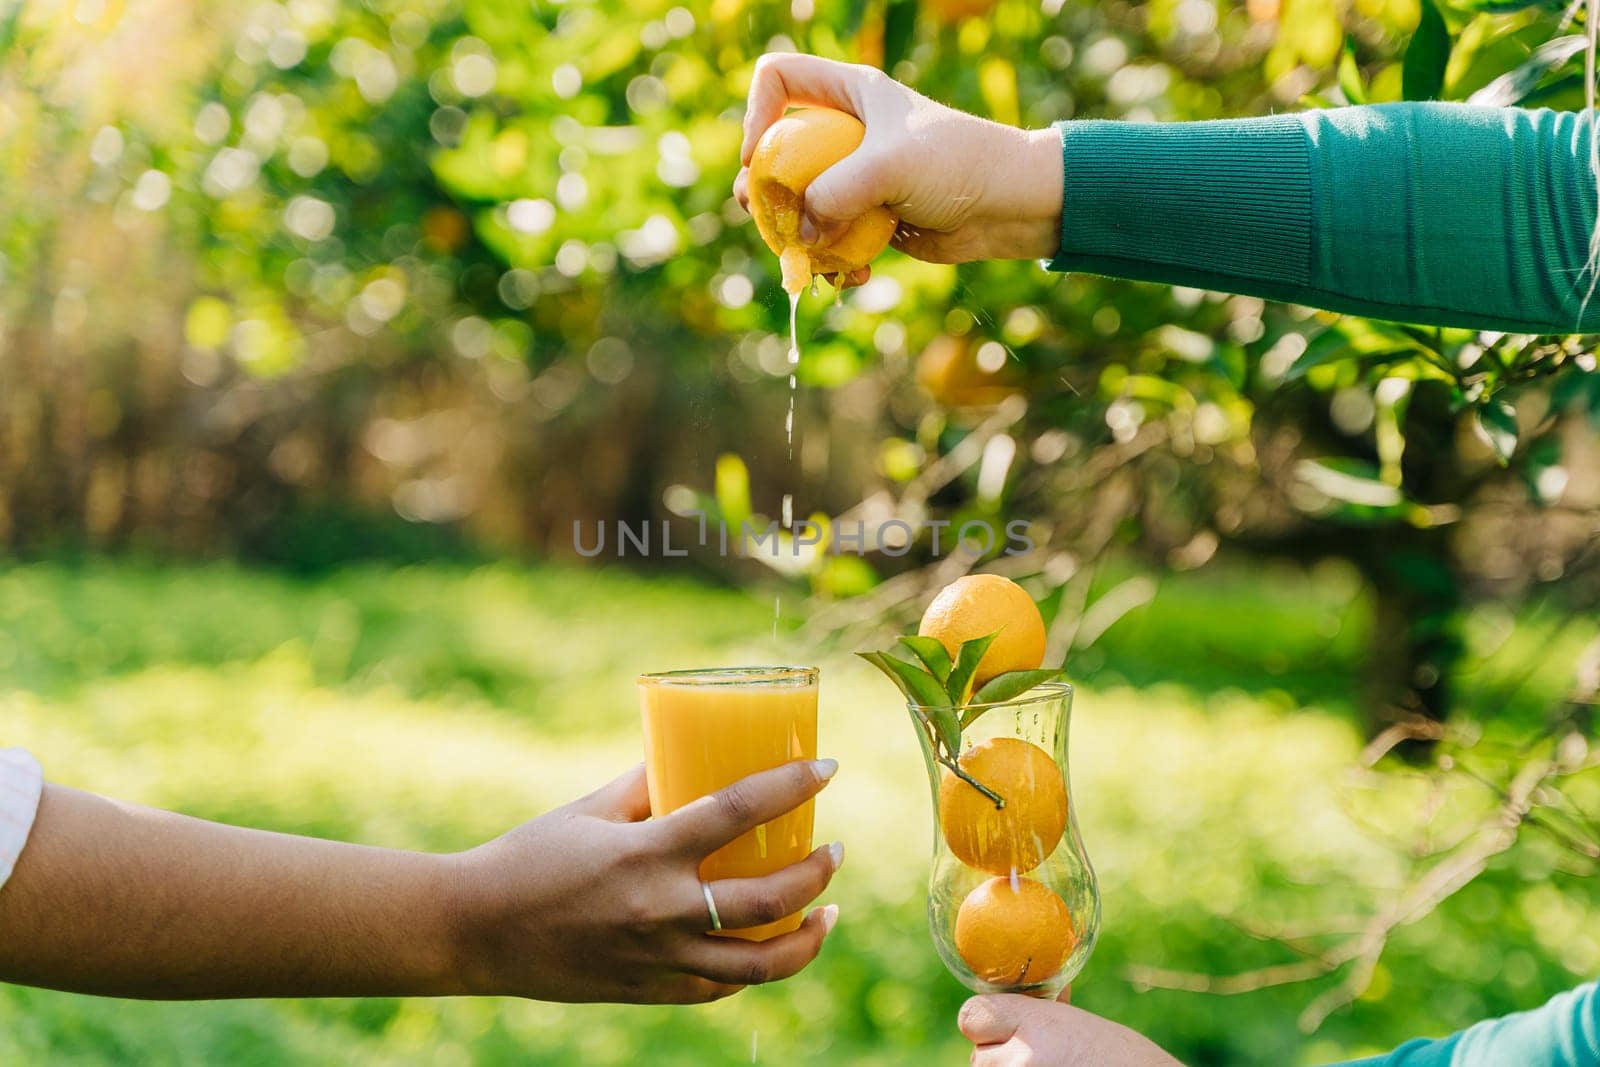 Woman's hand squeezes a fresh juicy organic ripe orange citrus juice into glass in the orangery orchard fruit garden farm